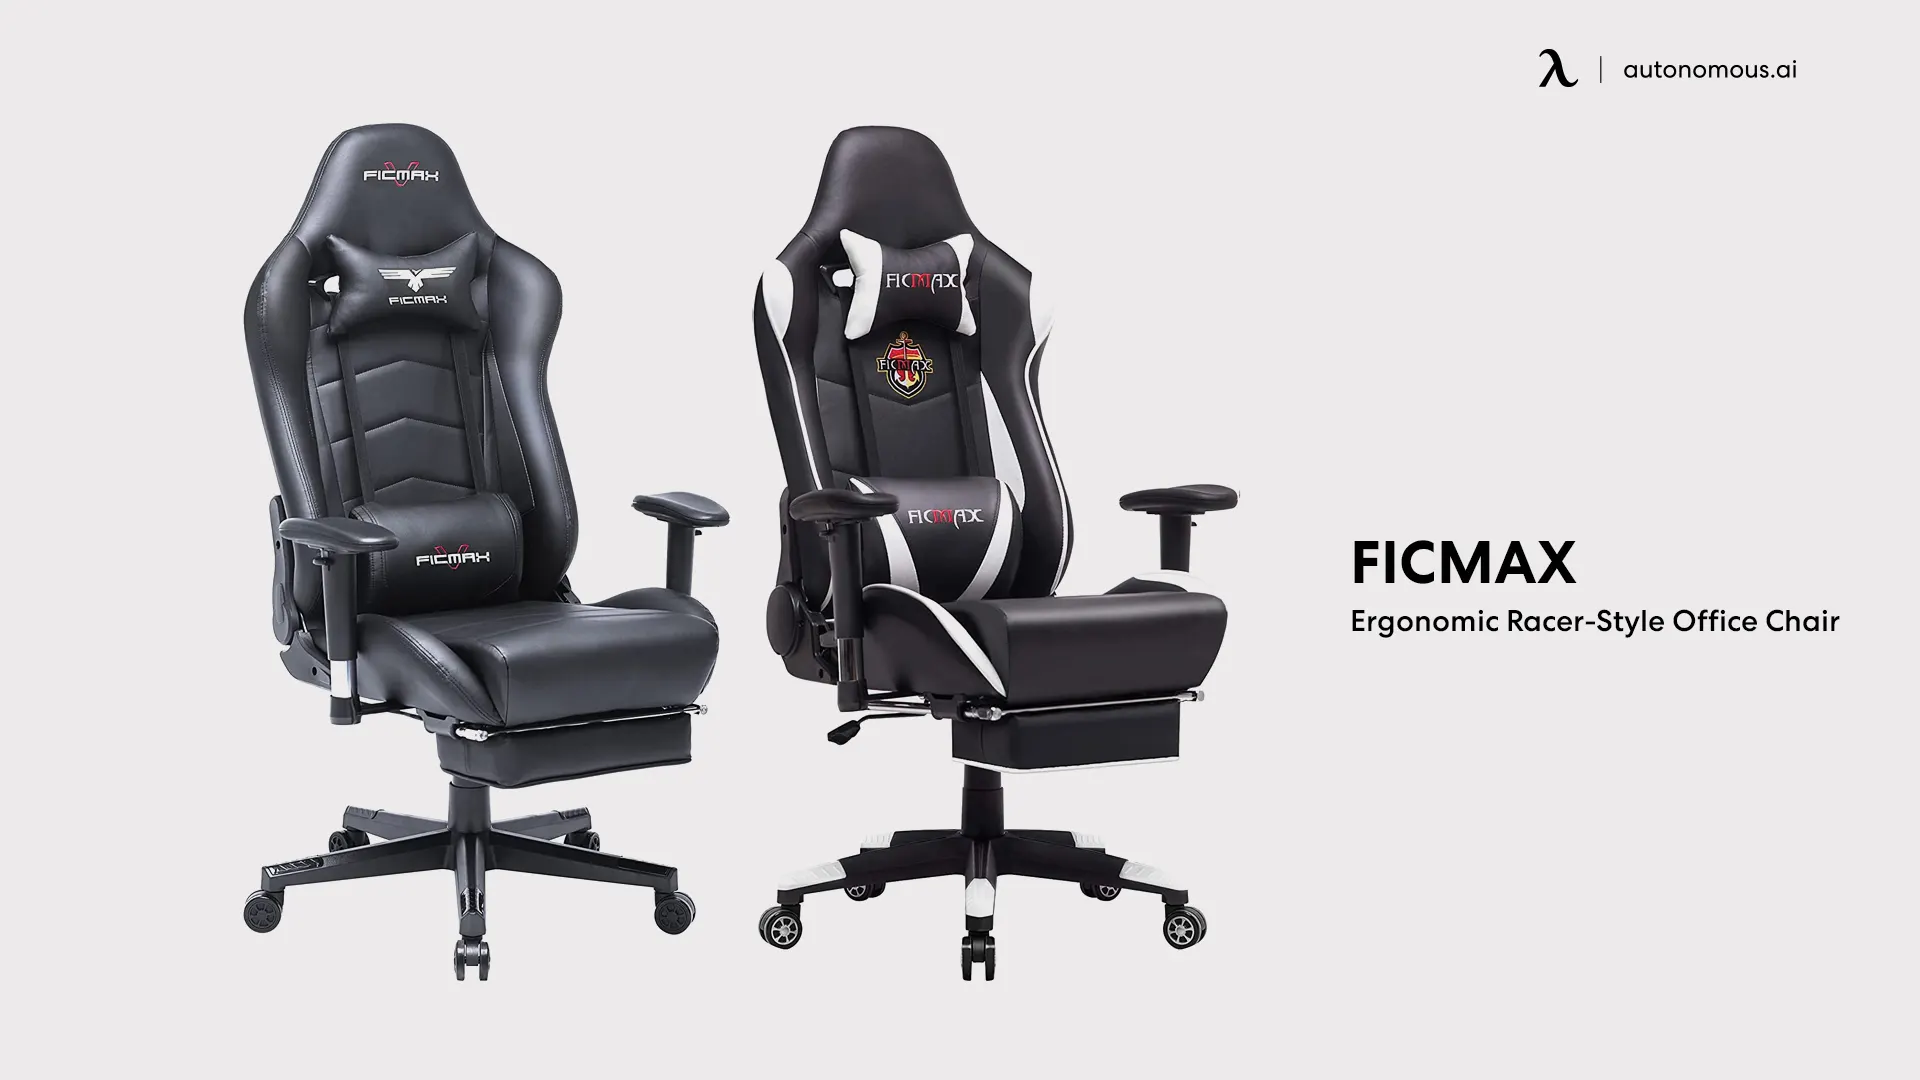 Ficmax Ergonomic Racer-Style Office Chair